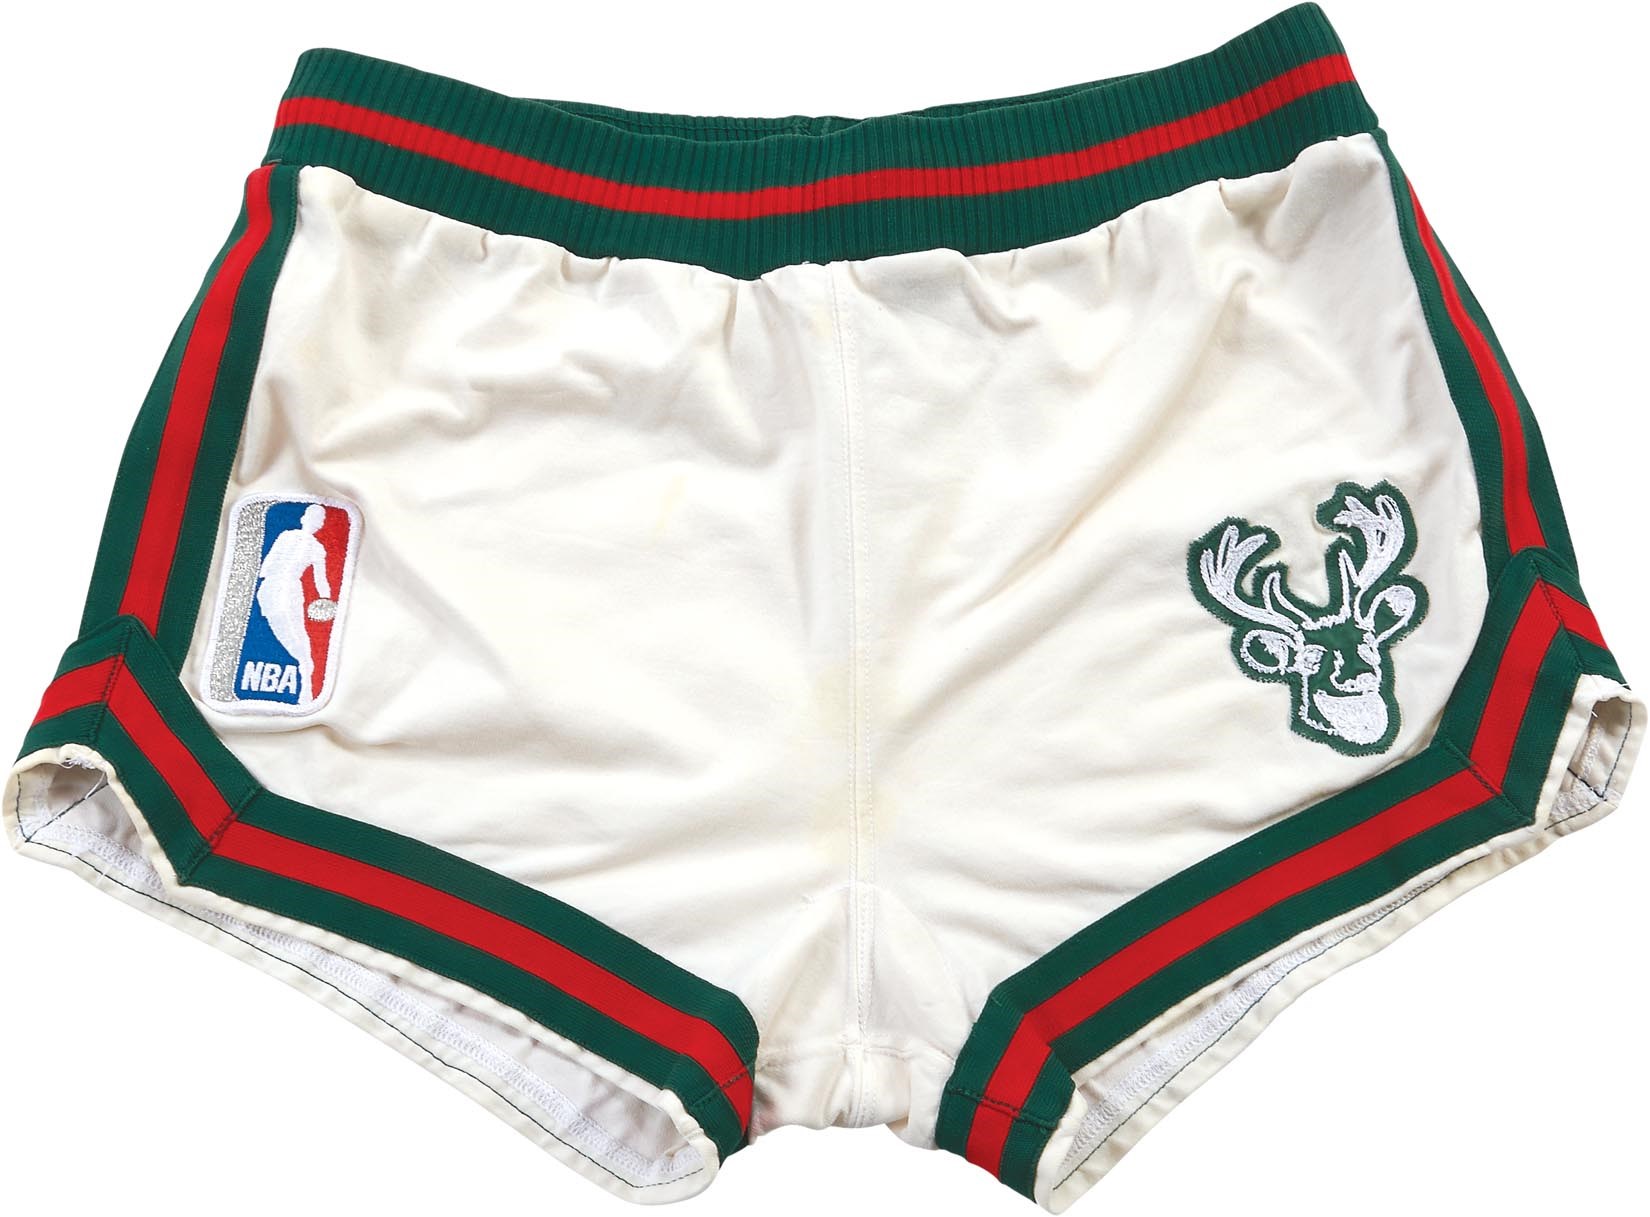 Early 1970s Oscar Robertson Milwaukee Bucks Game Worn Shorts